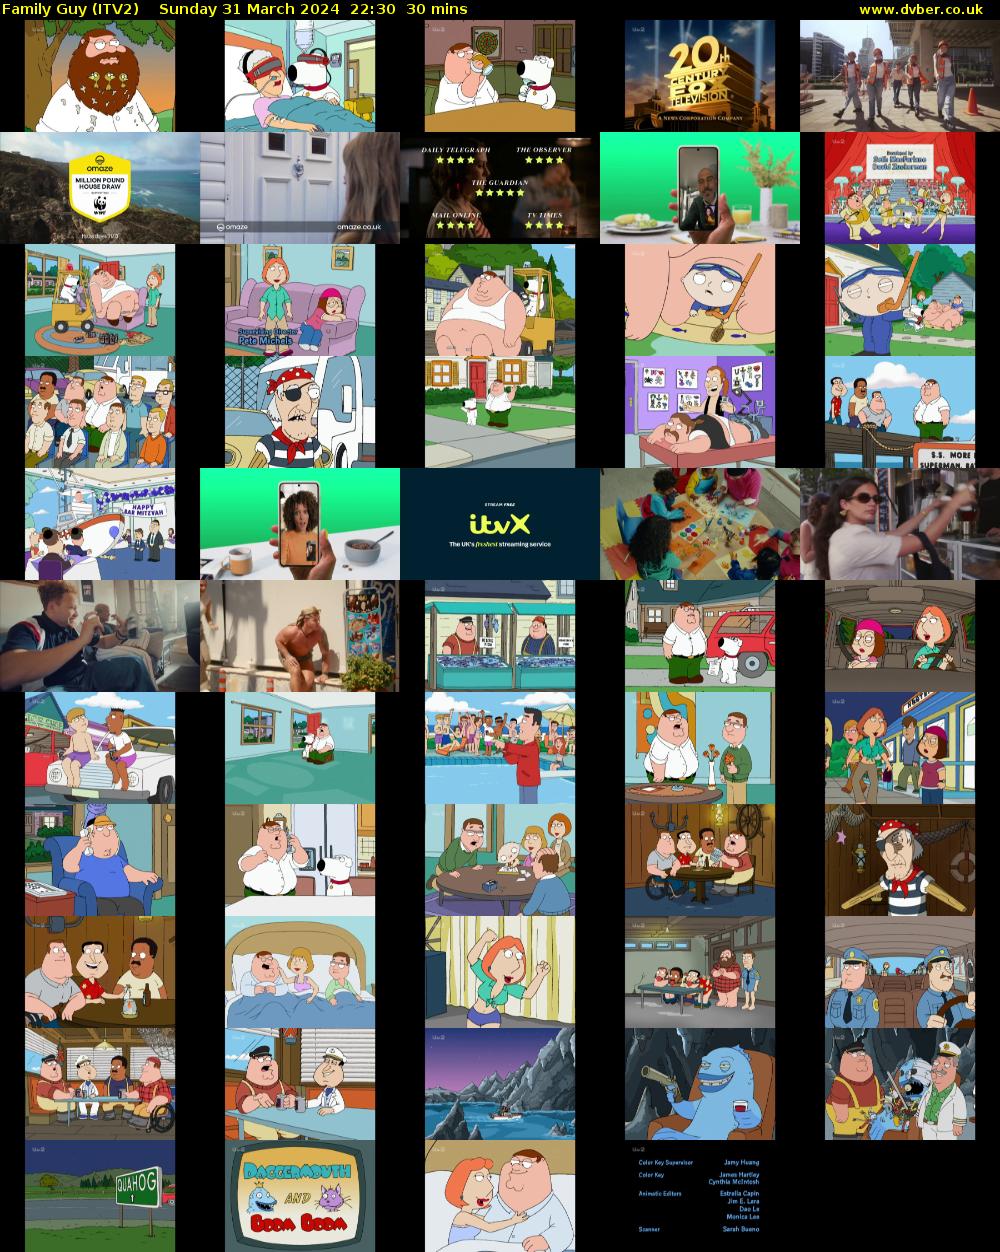 Family Guy (ITV2) Sunday 31 March 2024 22:30 - 23:00